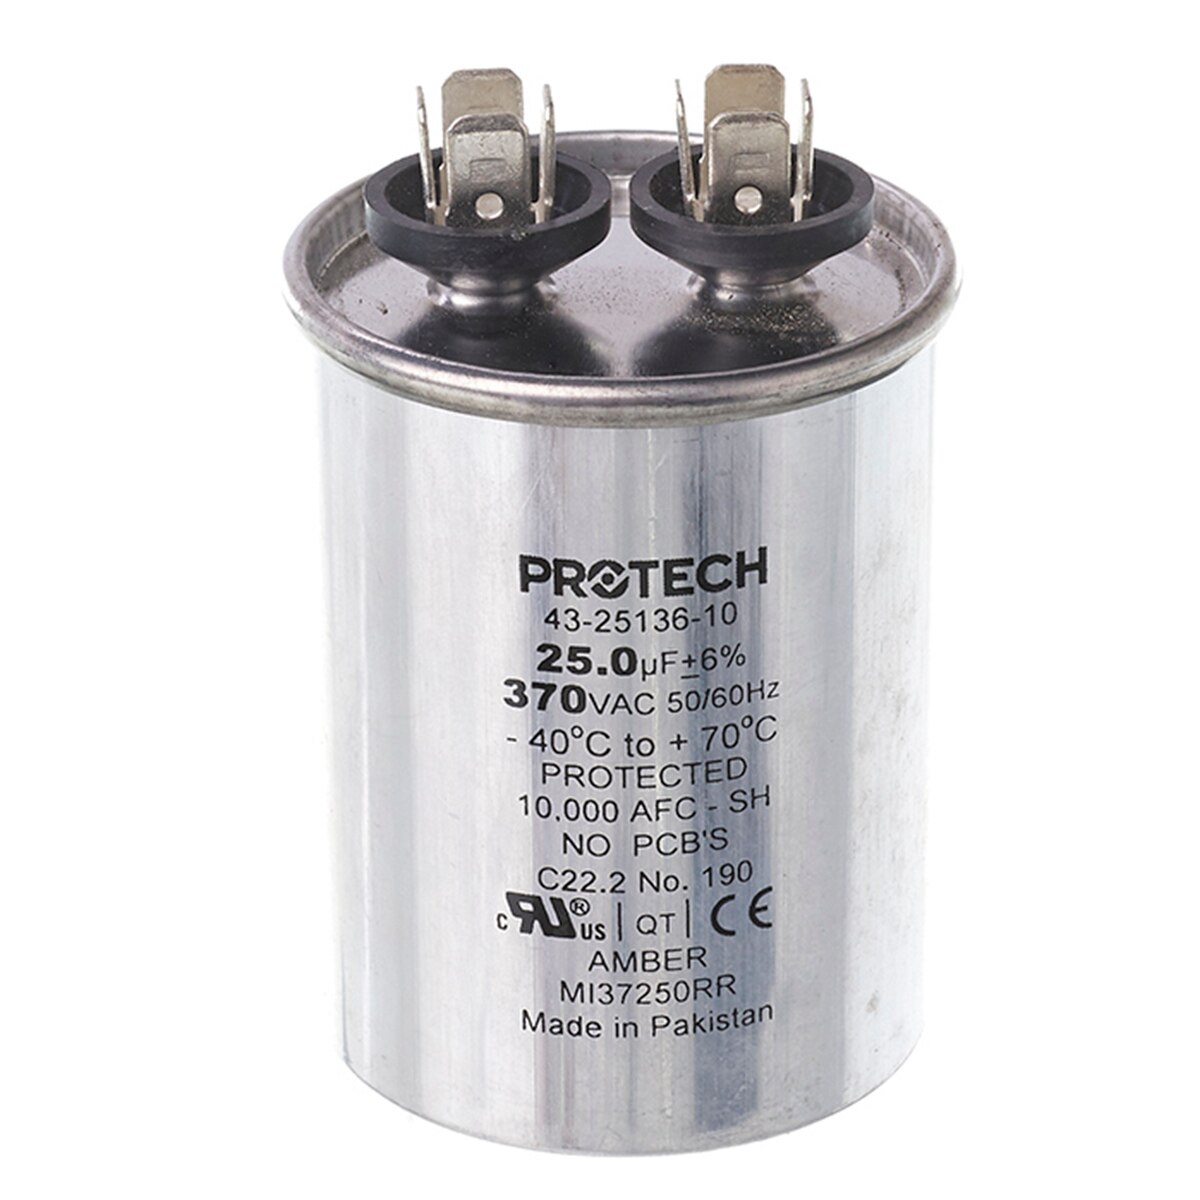 Rheem/Protech 43-25136-12 Capacitor 35/370 Single Round metal finish new 